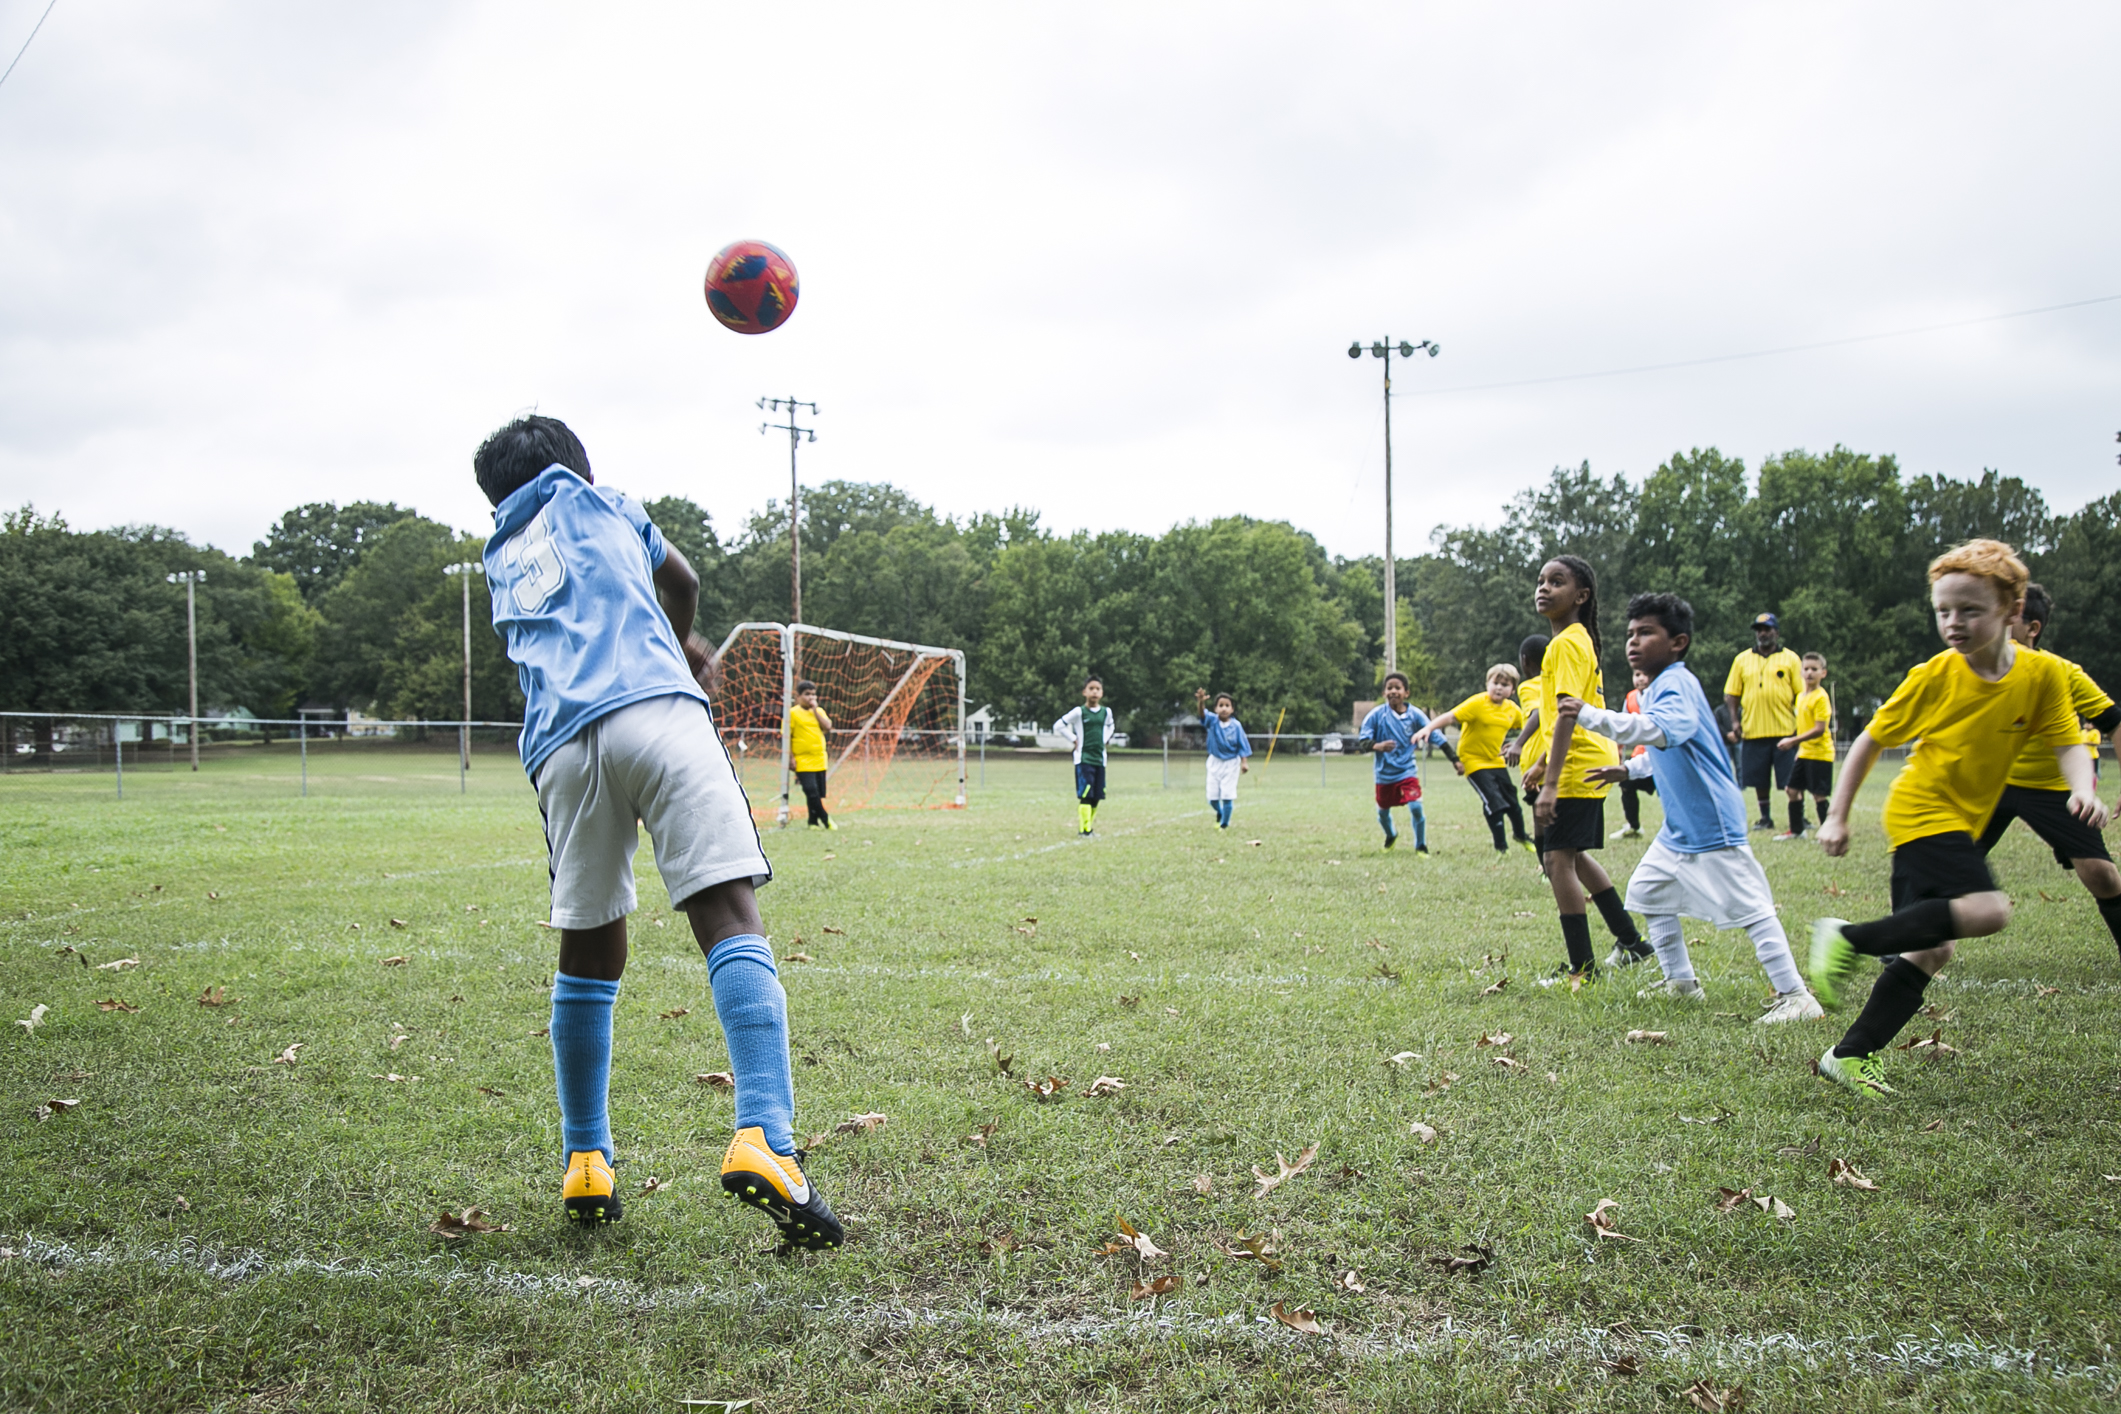 A young soccer team practices at Gaisman Park. (Natalie Eddings)